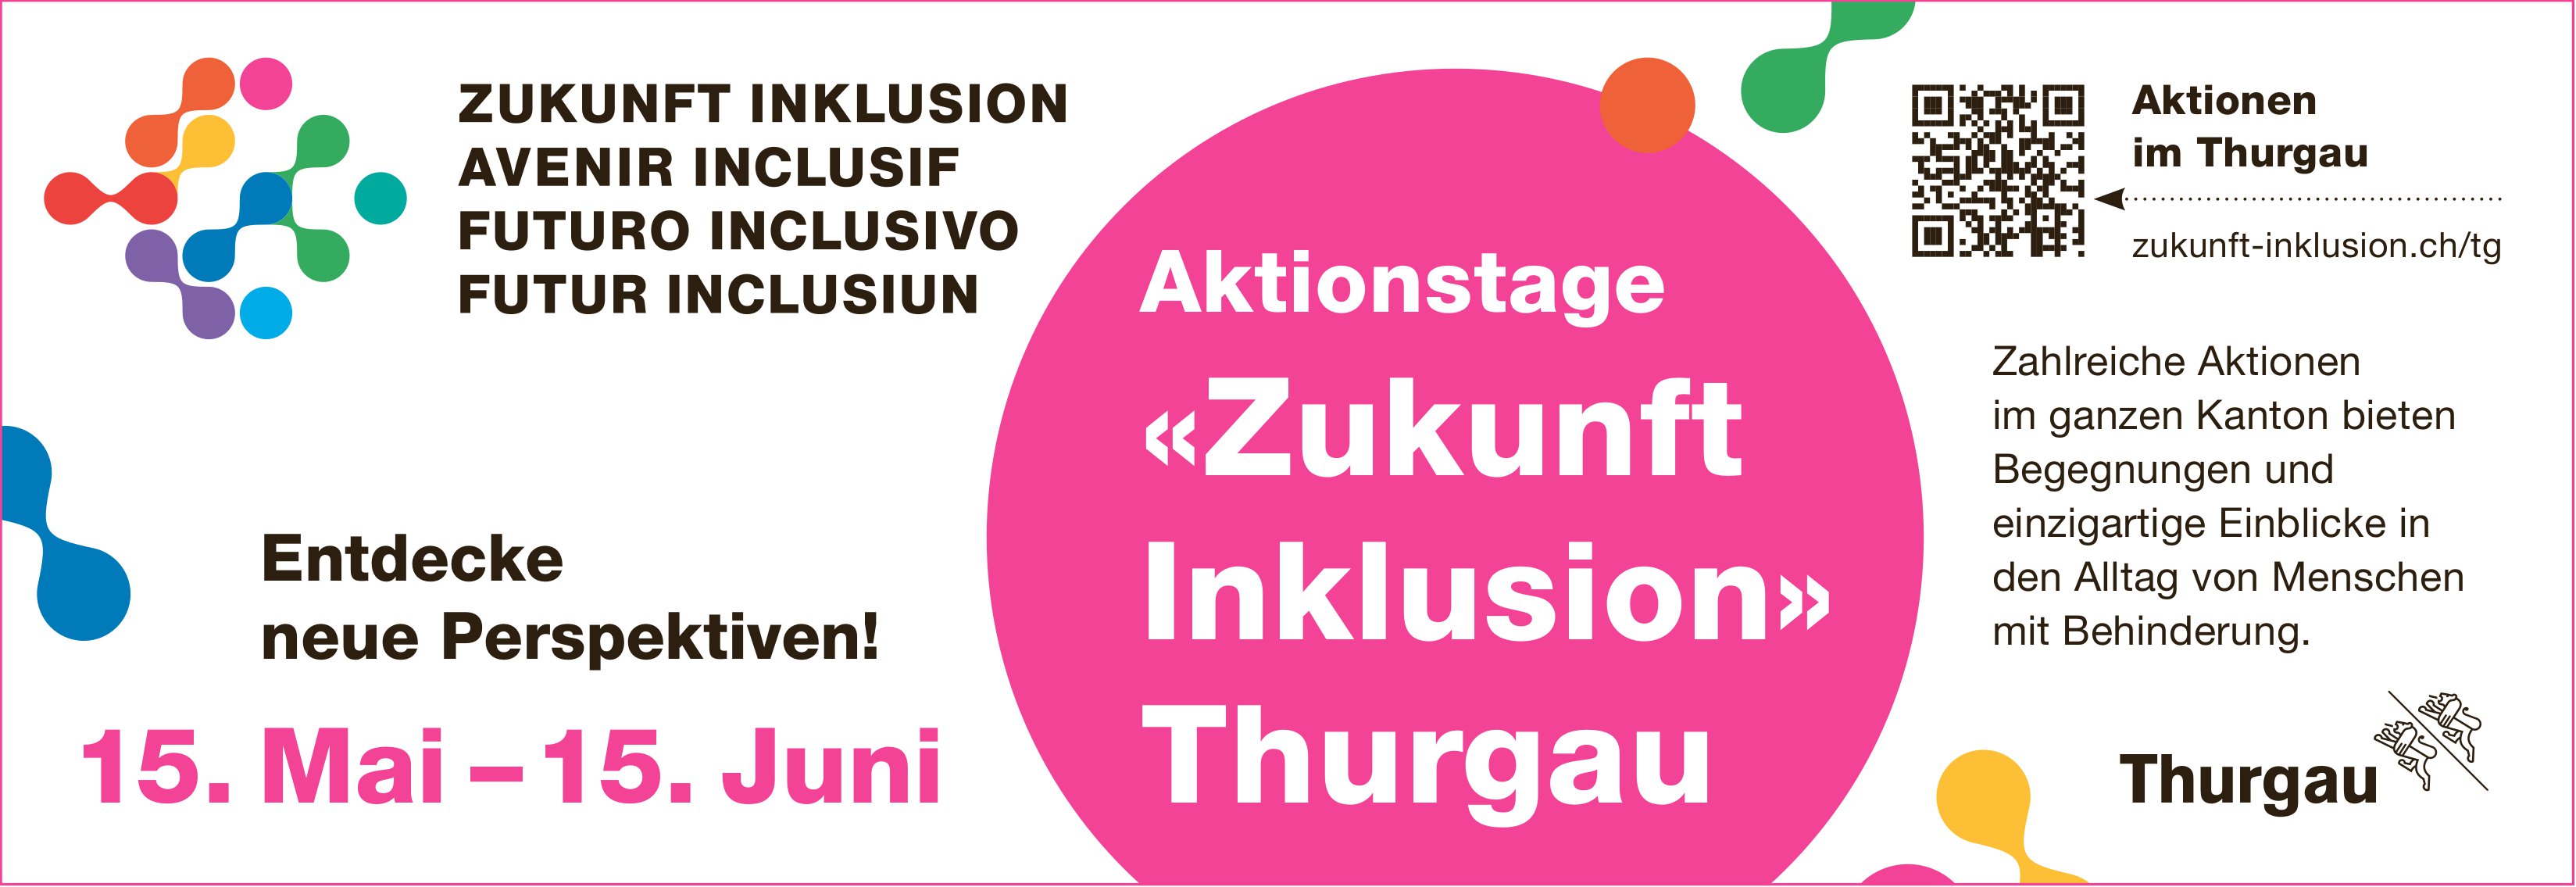 Aktionstage «Zukunft Inklusion» Thurgau, 15. Mai-15. Juni